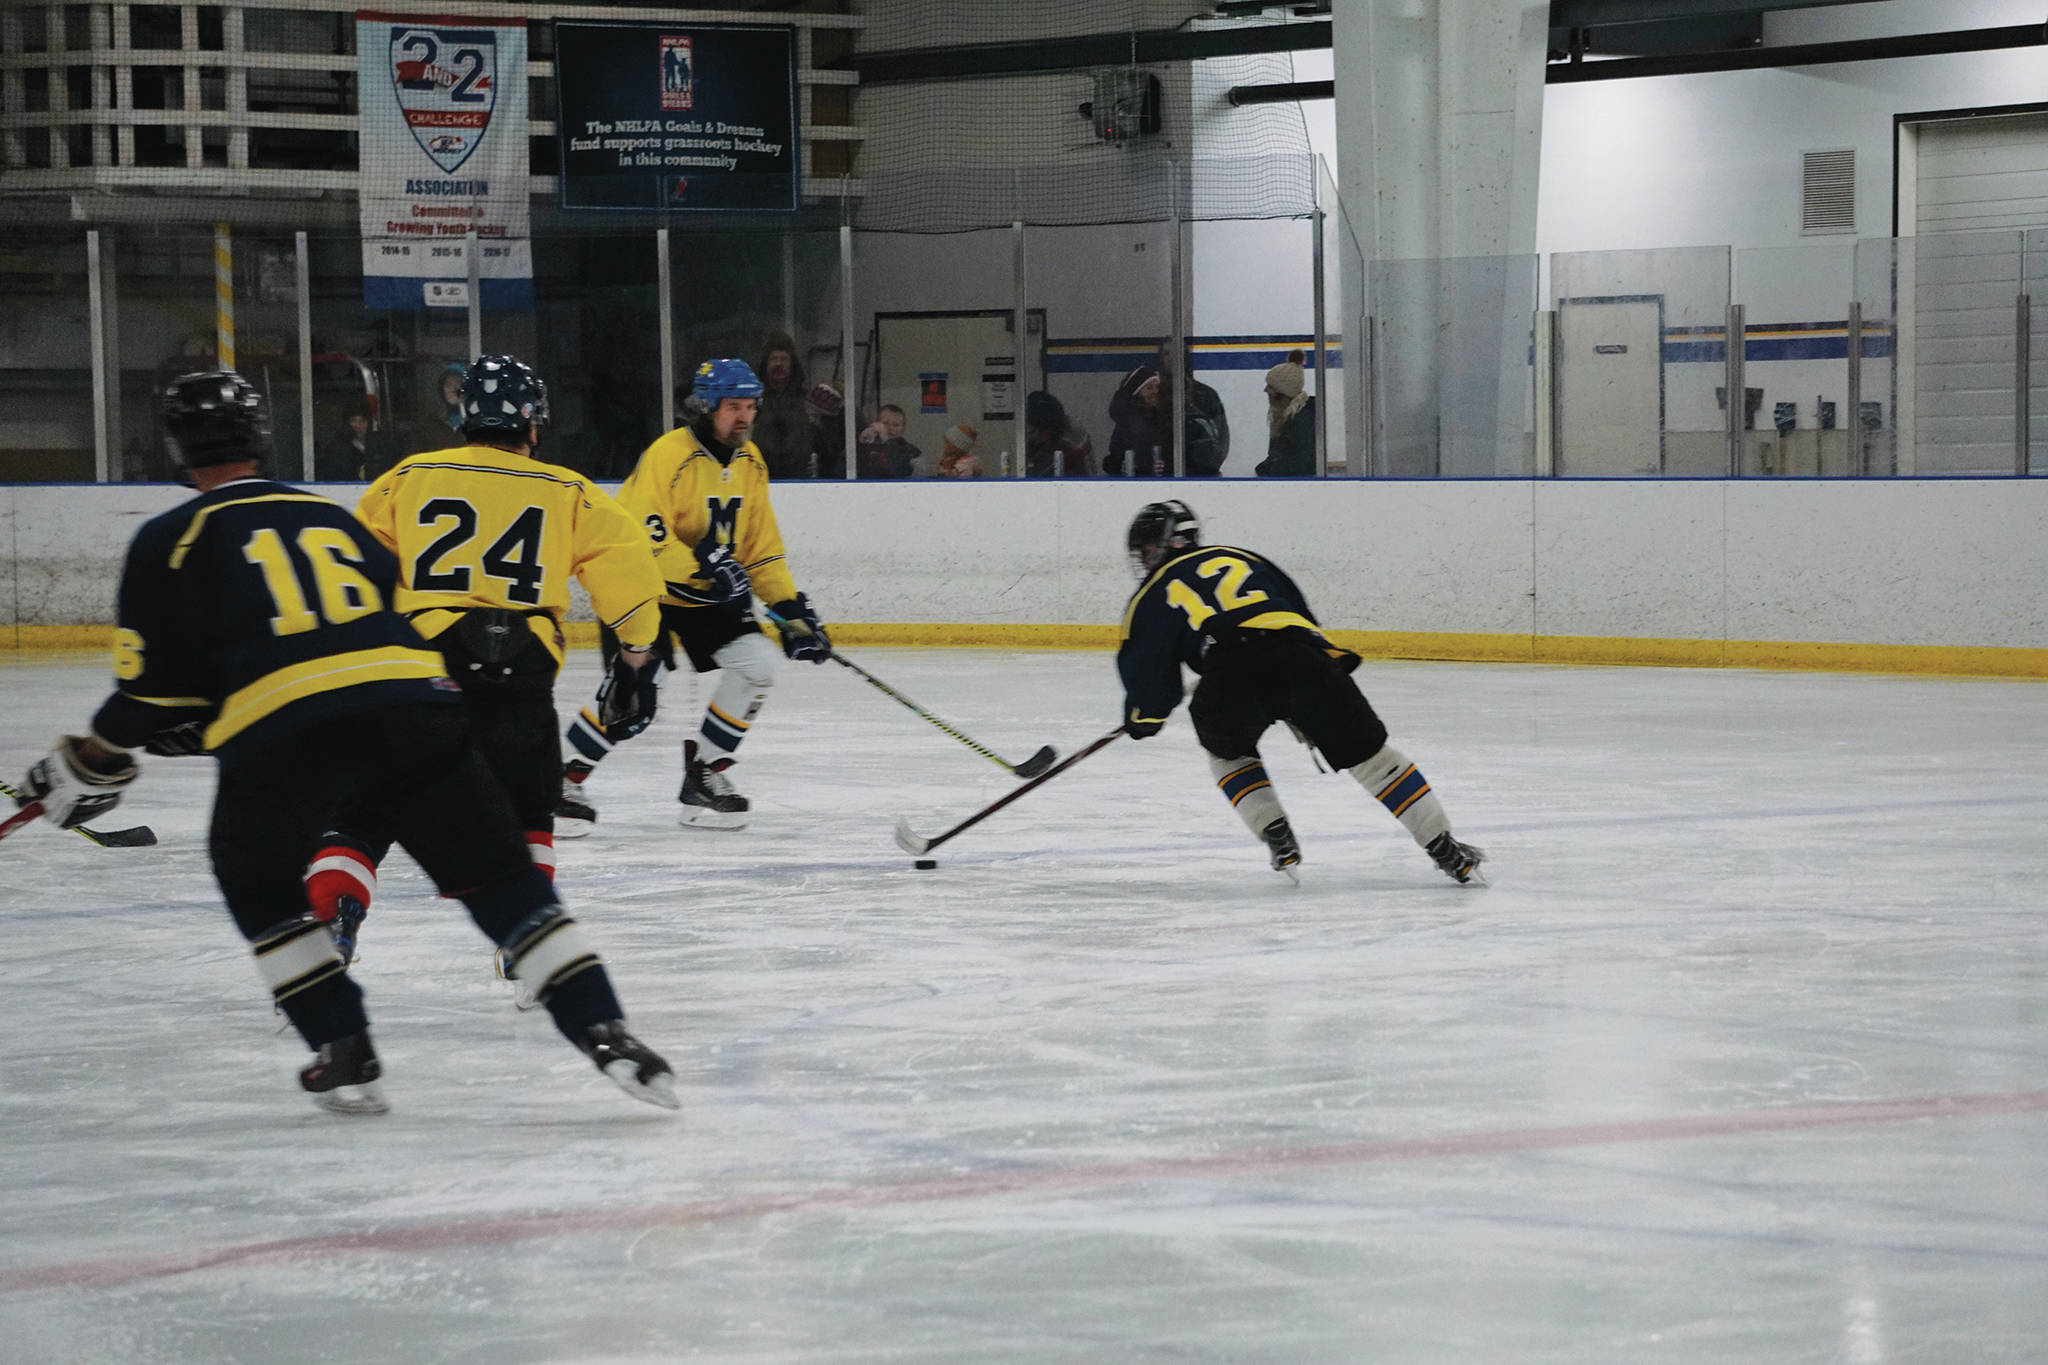 Mariner alums reunite in hockey game